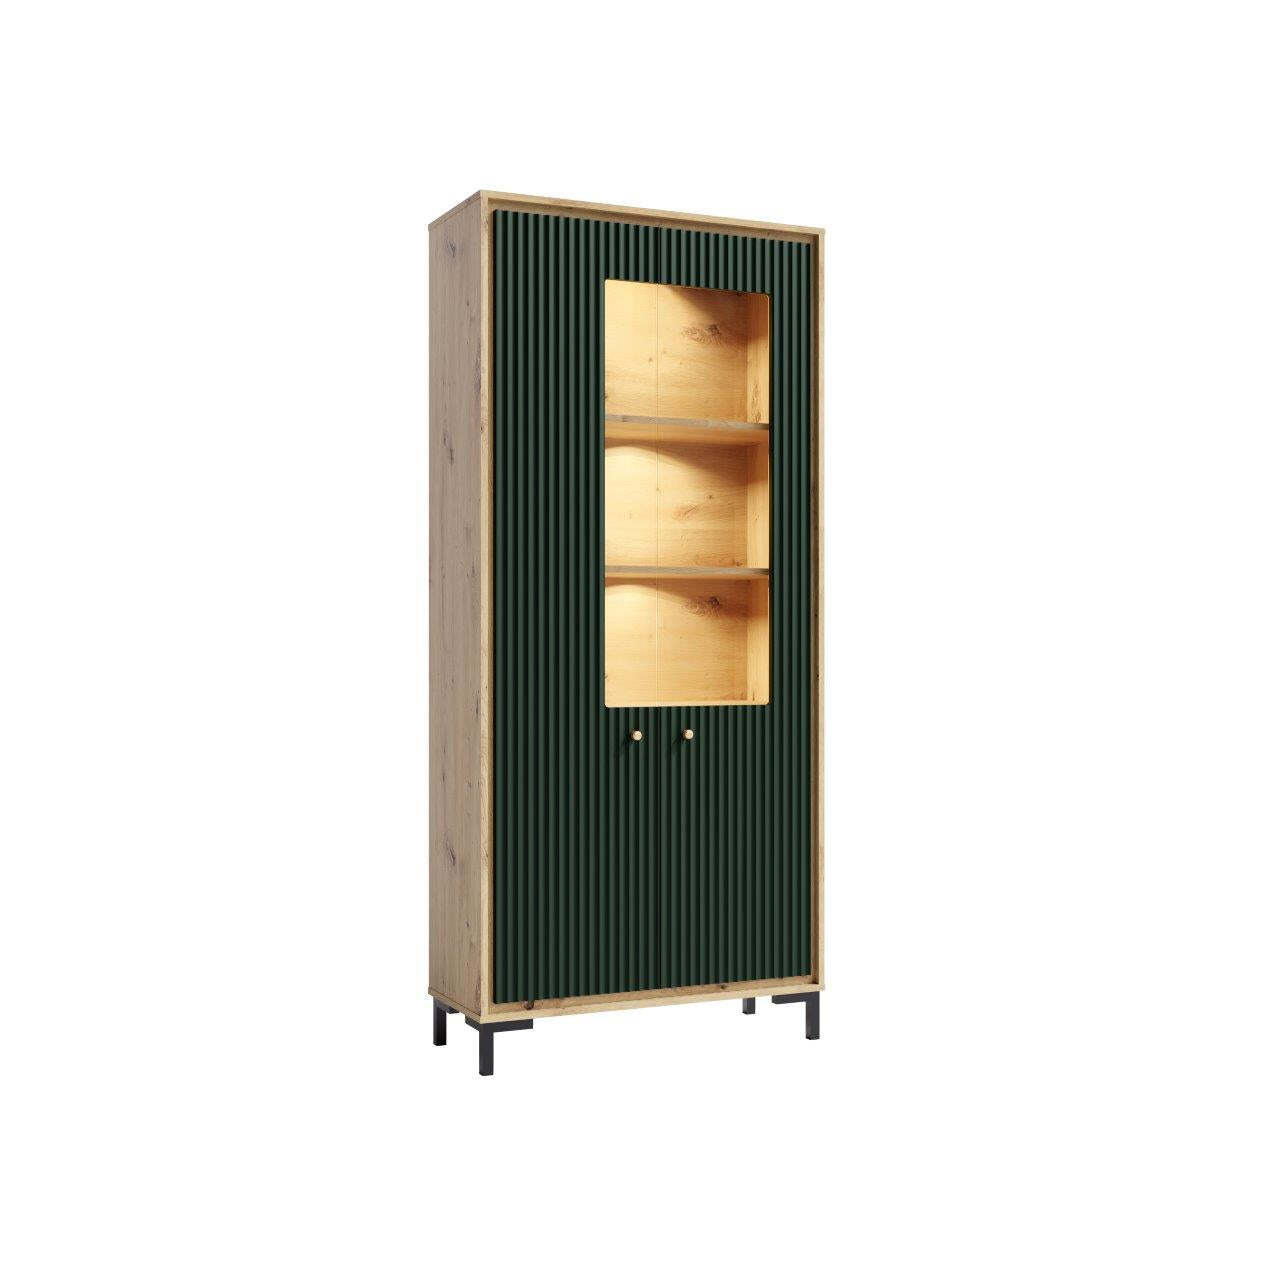 Parii Tall Display Cabinet 89cm - Green 89cm - image 1